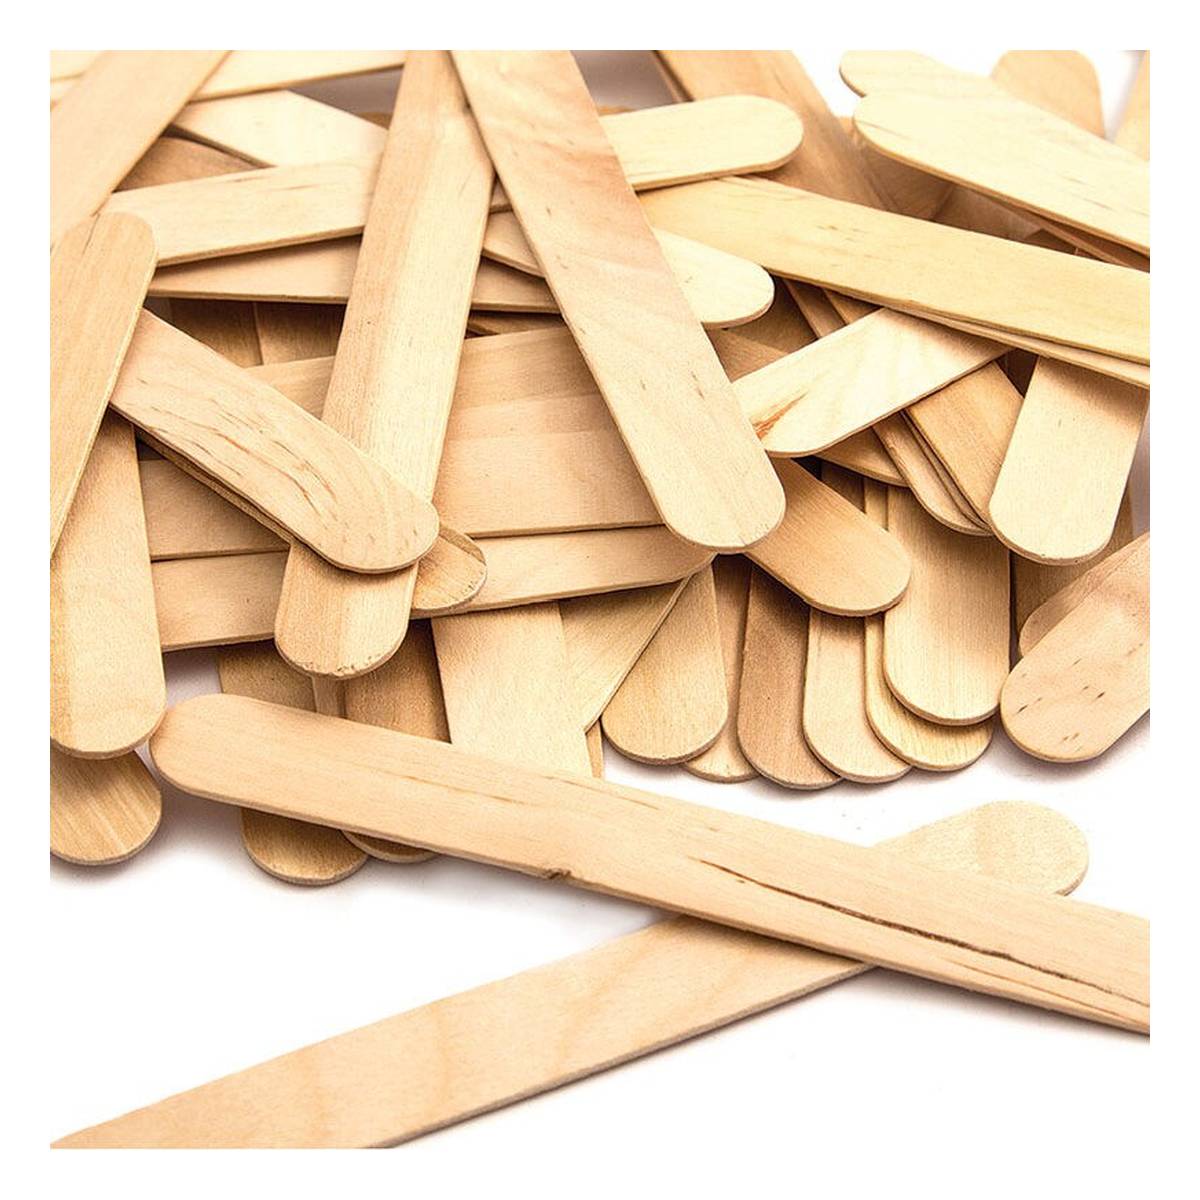 Buy Natural Wooden Craft Sticks 50 Pack for GBP 1.00 | Hobbycraft UK